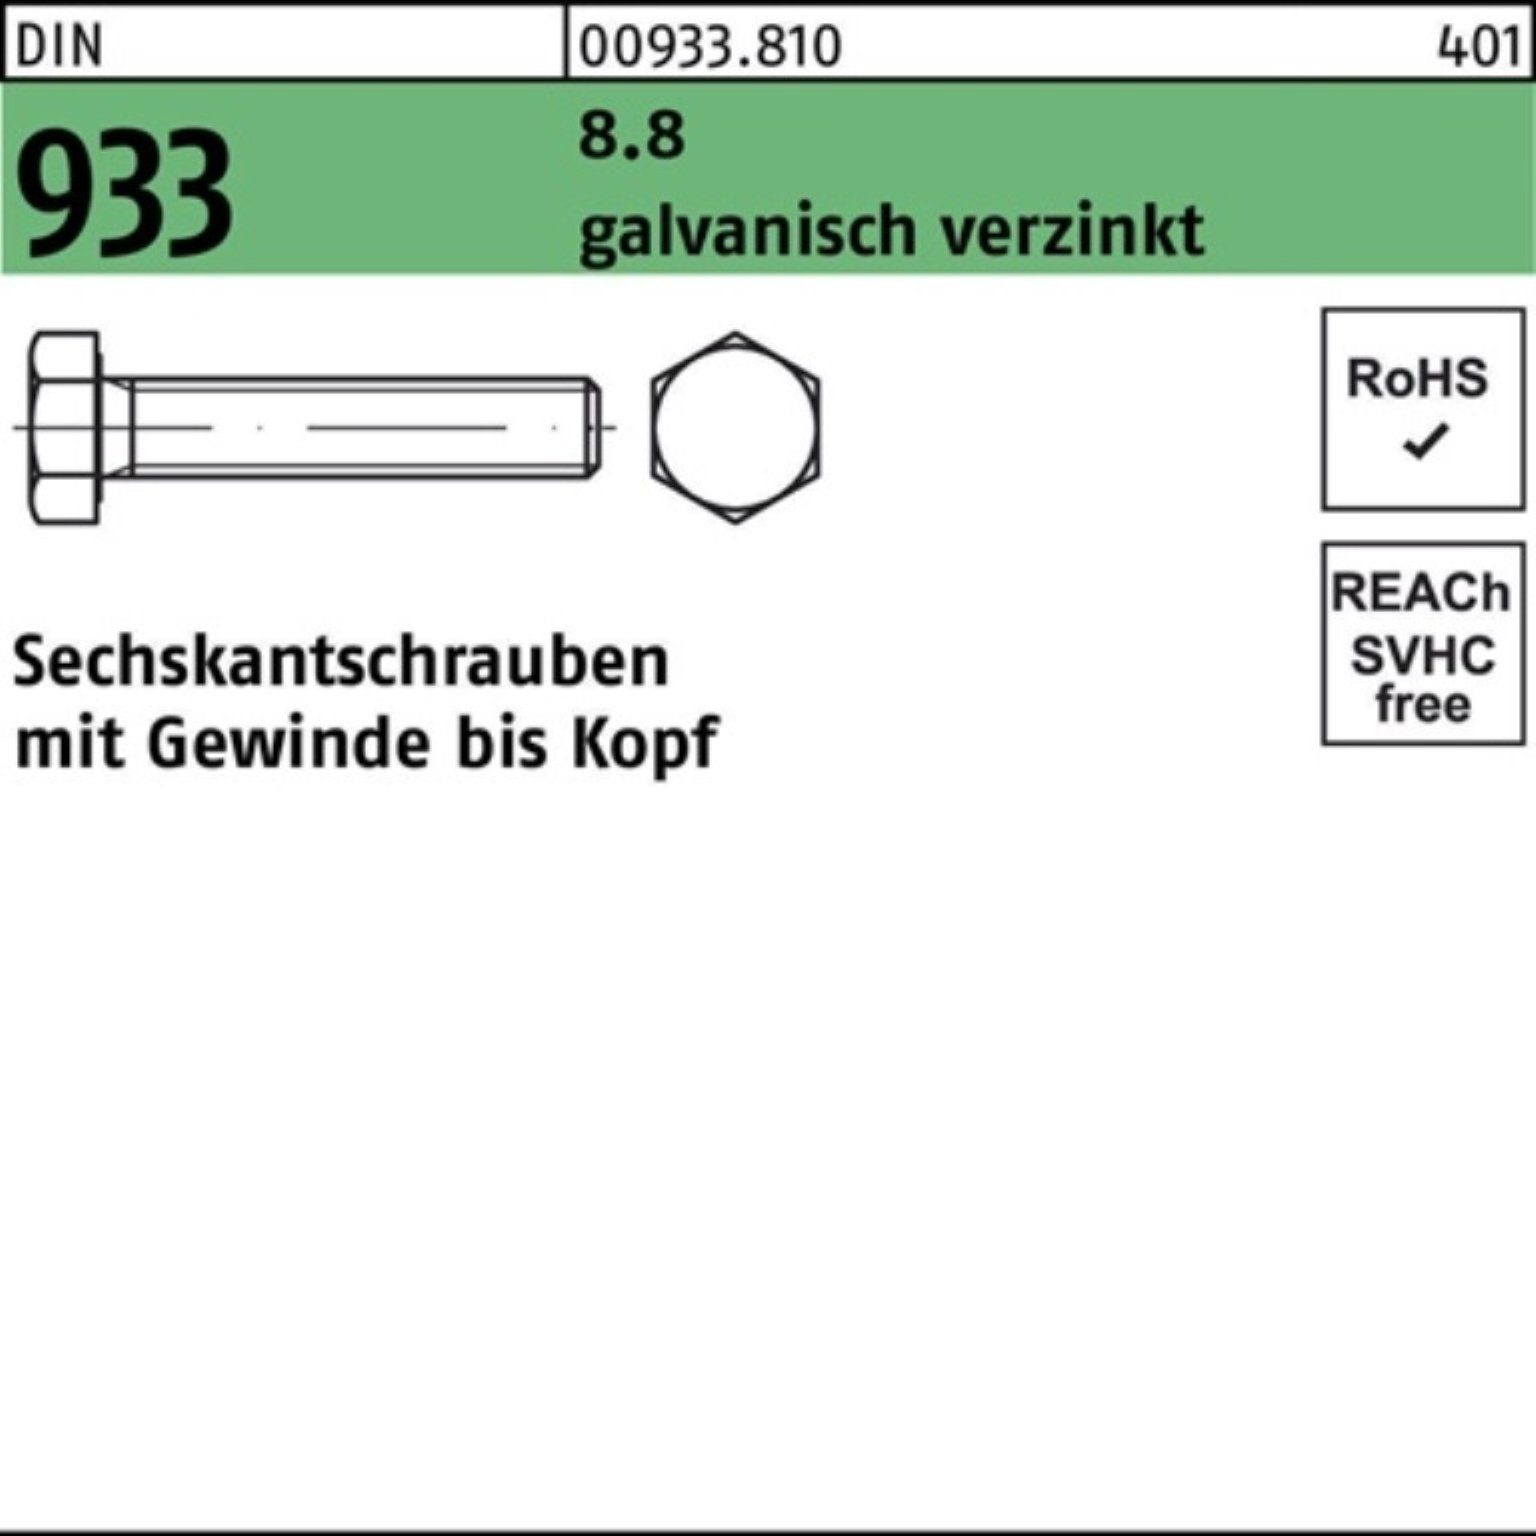 Reyher Sechskantschraube 100er Pack Sechskantschraube M30x 1 Stüc 8.8 55 VG 933 galv.verz. DIN